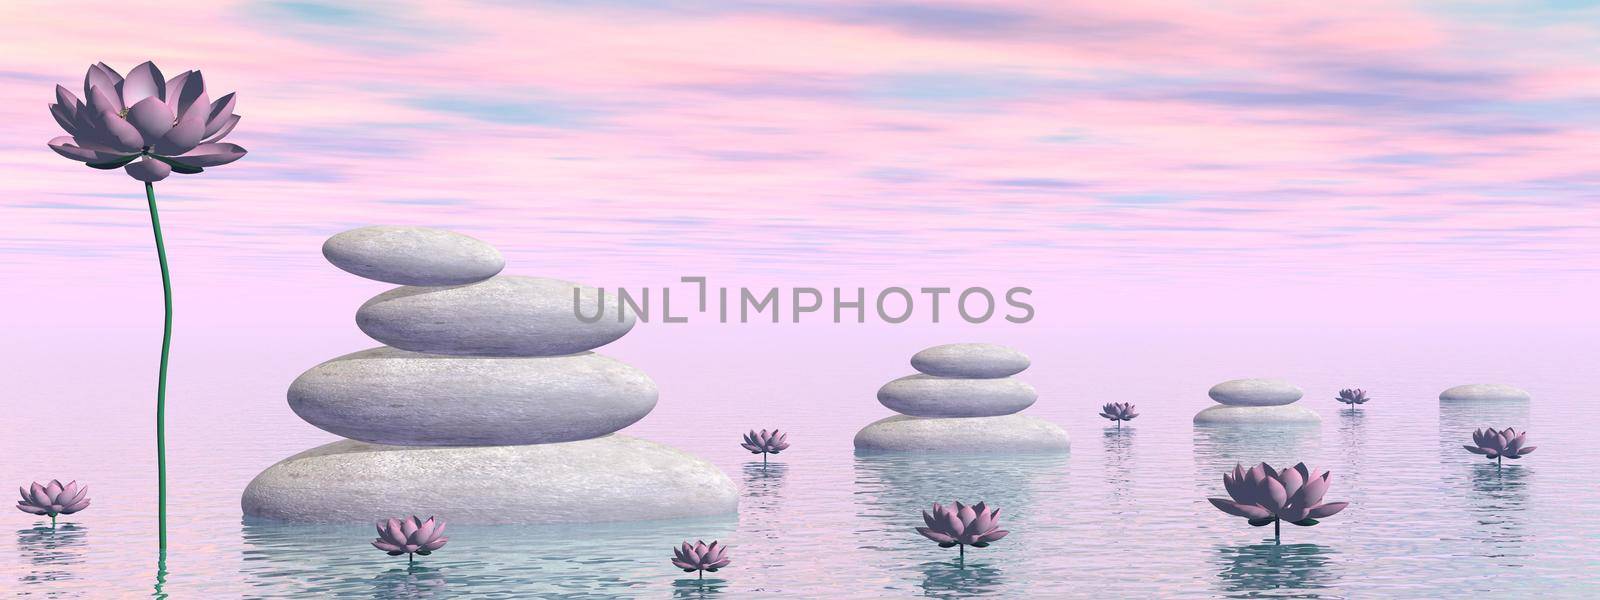 Zen lily flowers - 3D render by Elenaphotos21